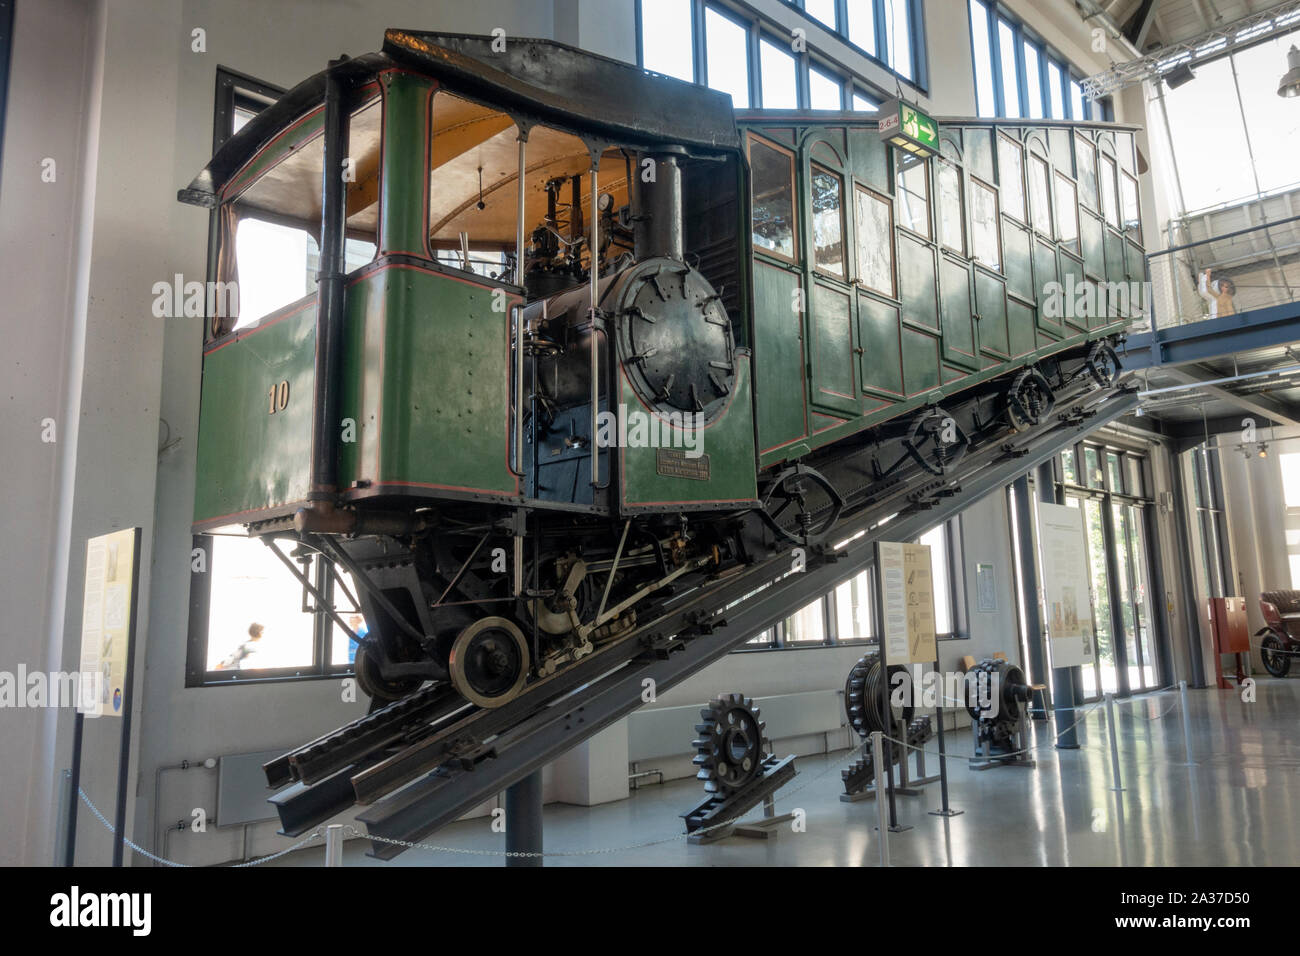 Steam propelled cogwheel car from the Pilatusbahn in the Deutsches Museum Verkehrszentrum (German Transport Museum), Munich, Germany. Stock Photo